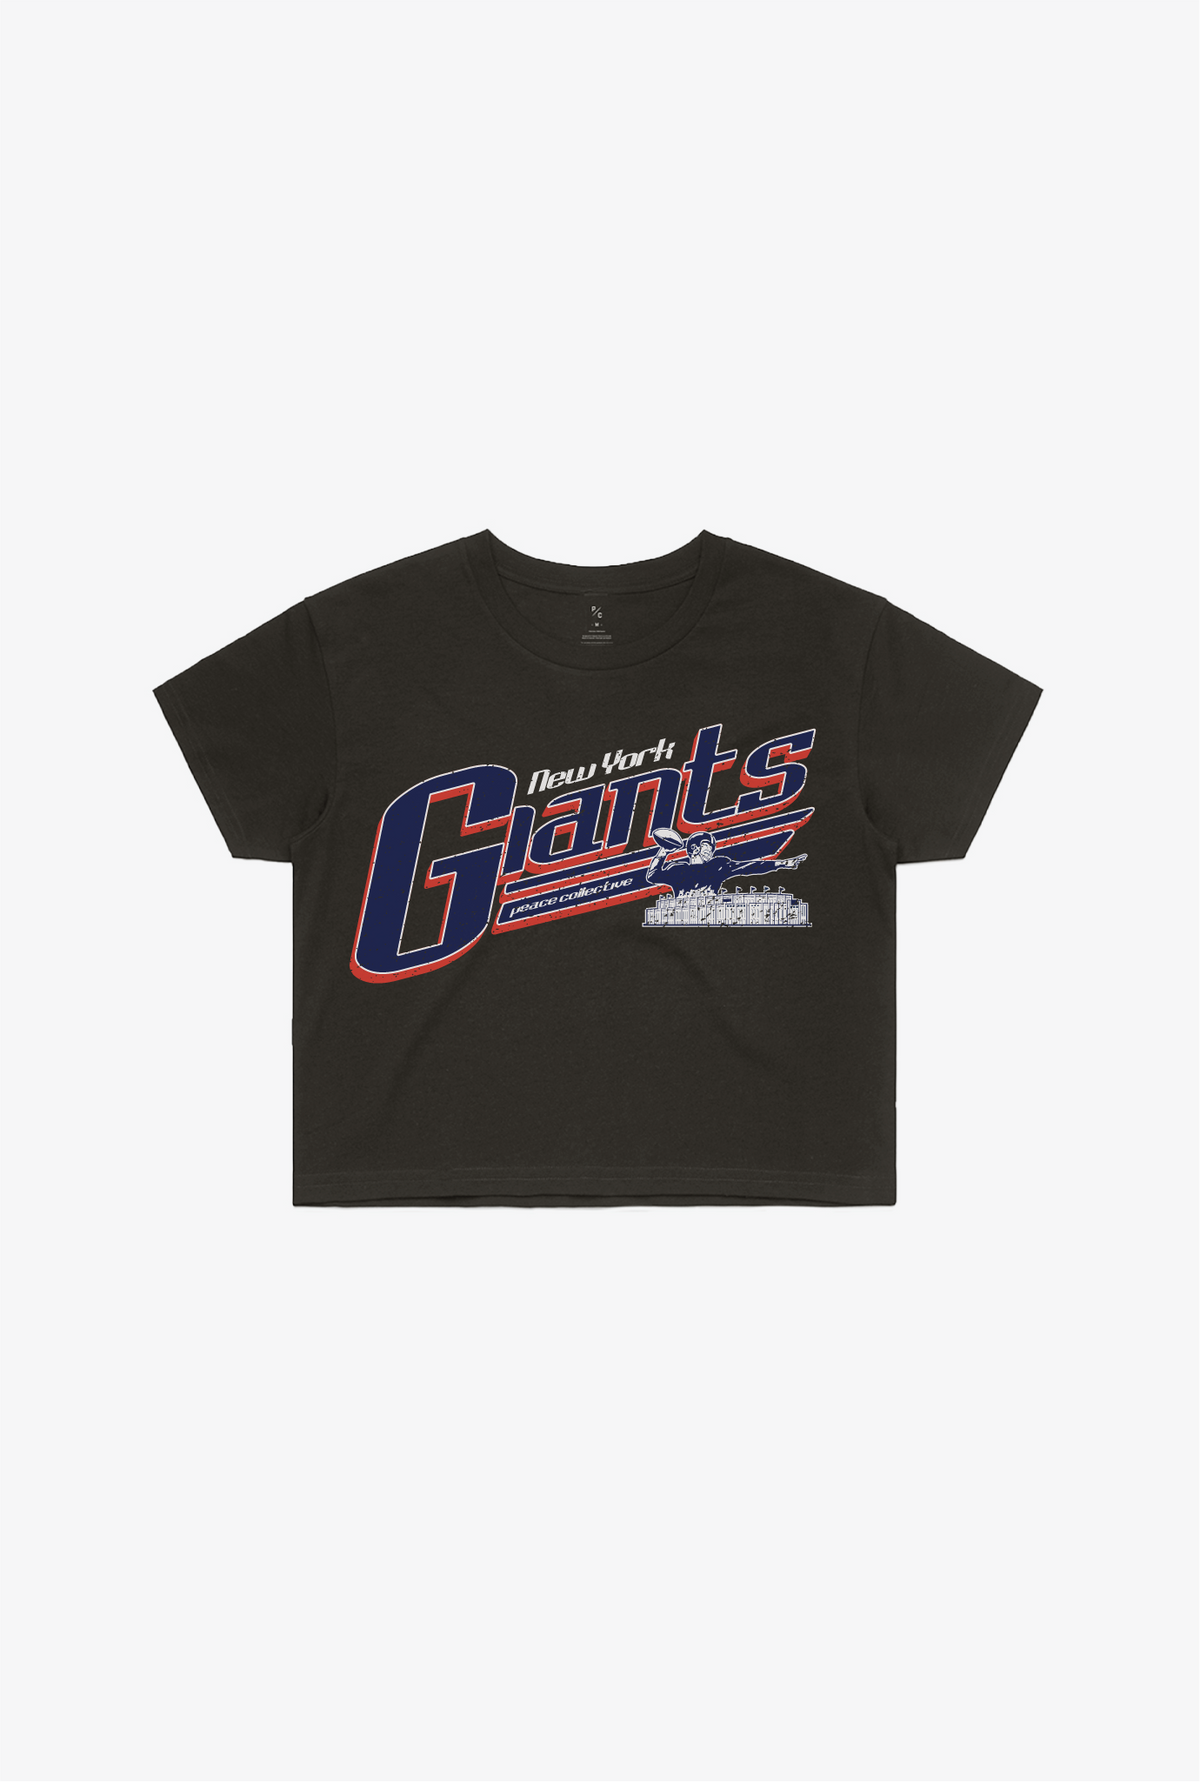 New York Giants Garment Dyed Cropped T-Shirt - Black